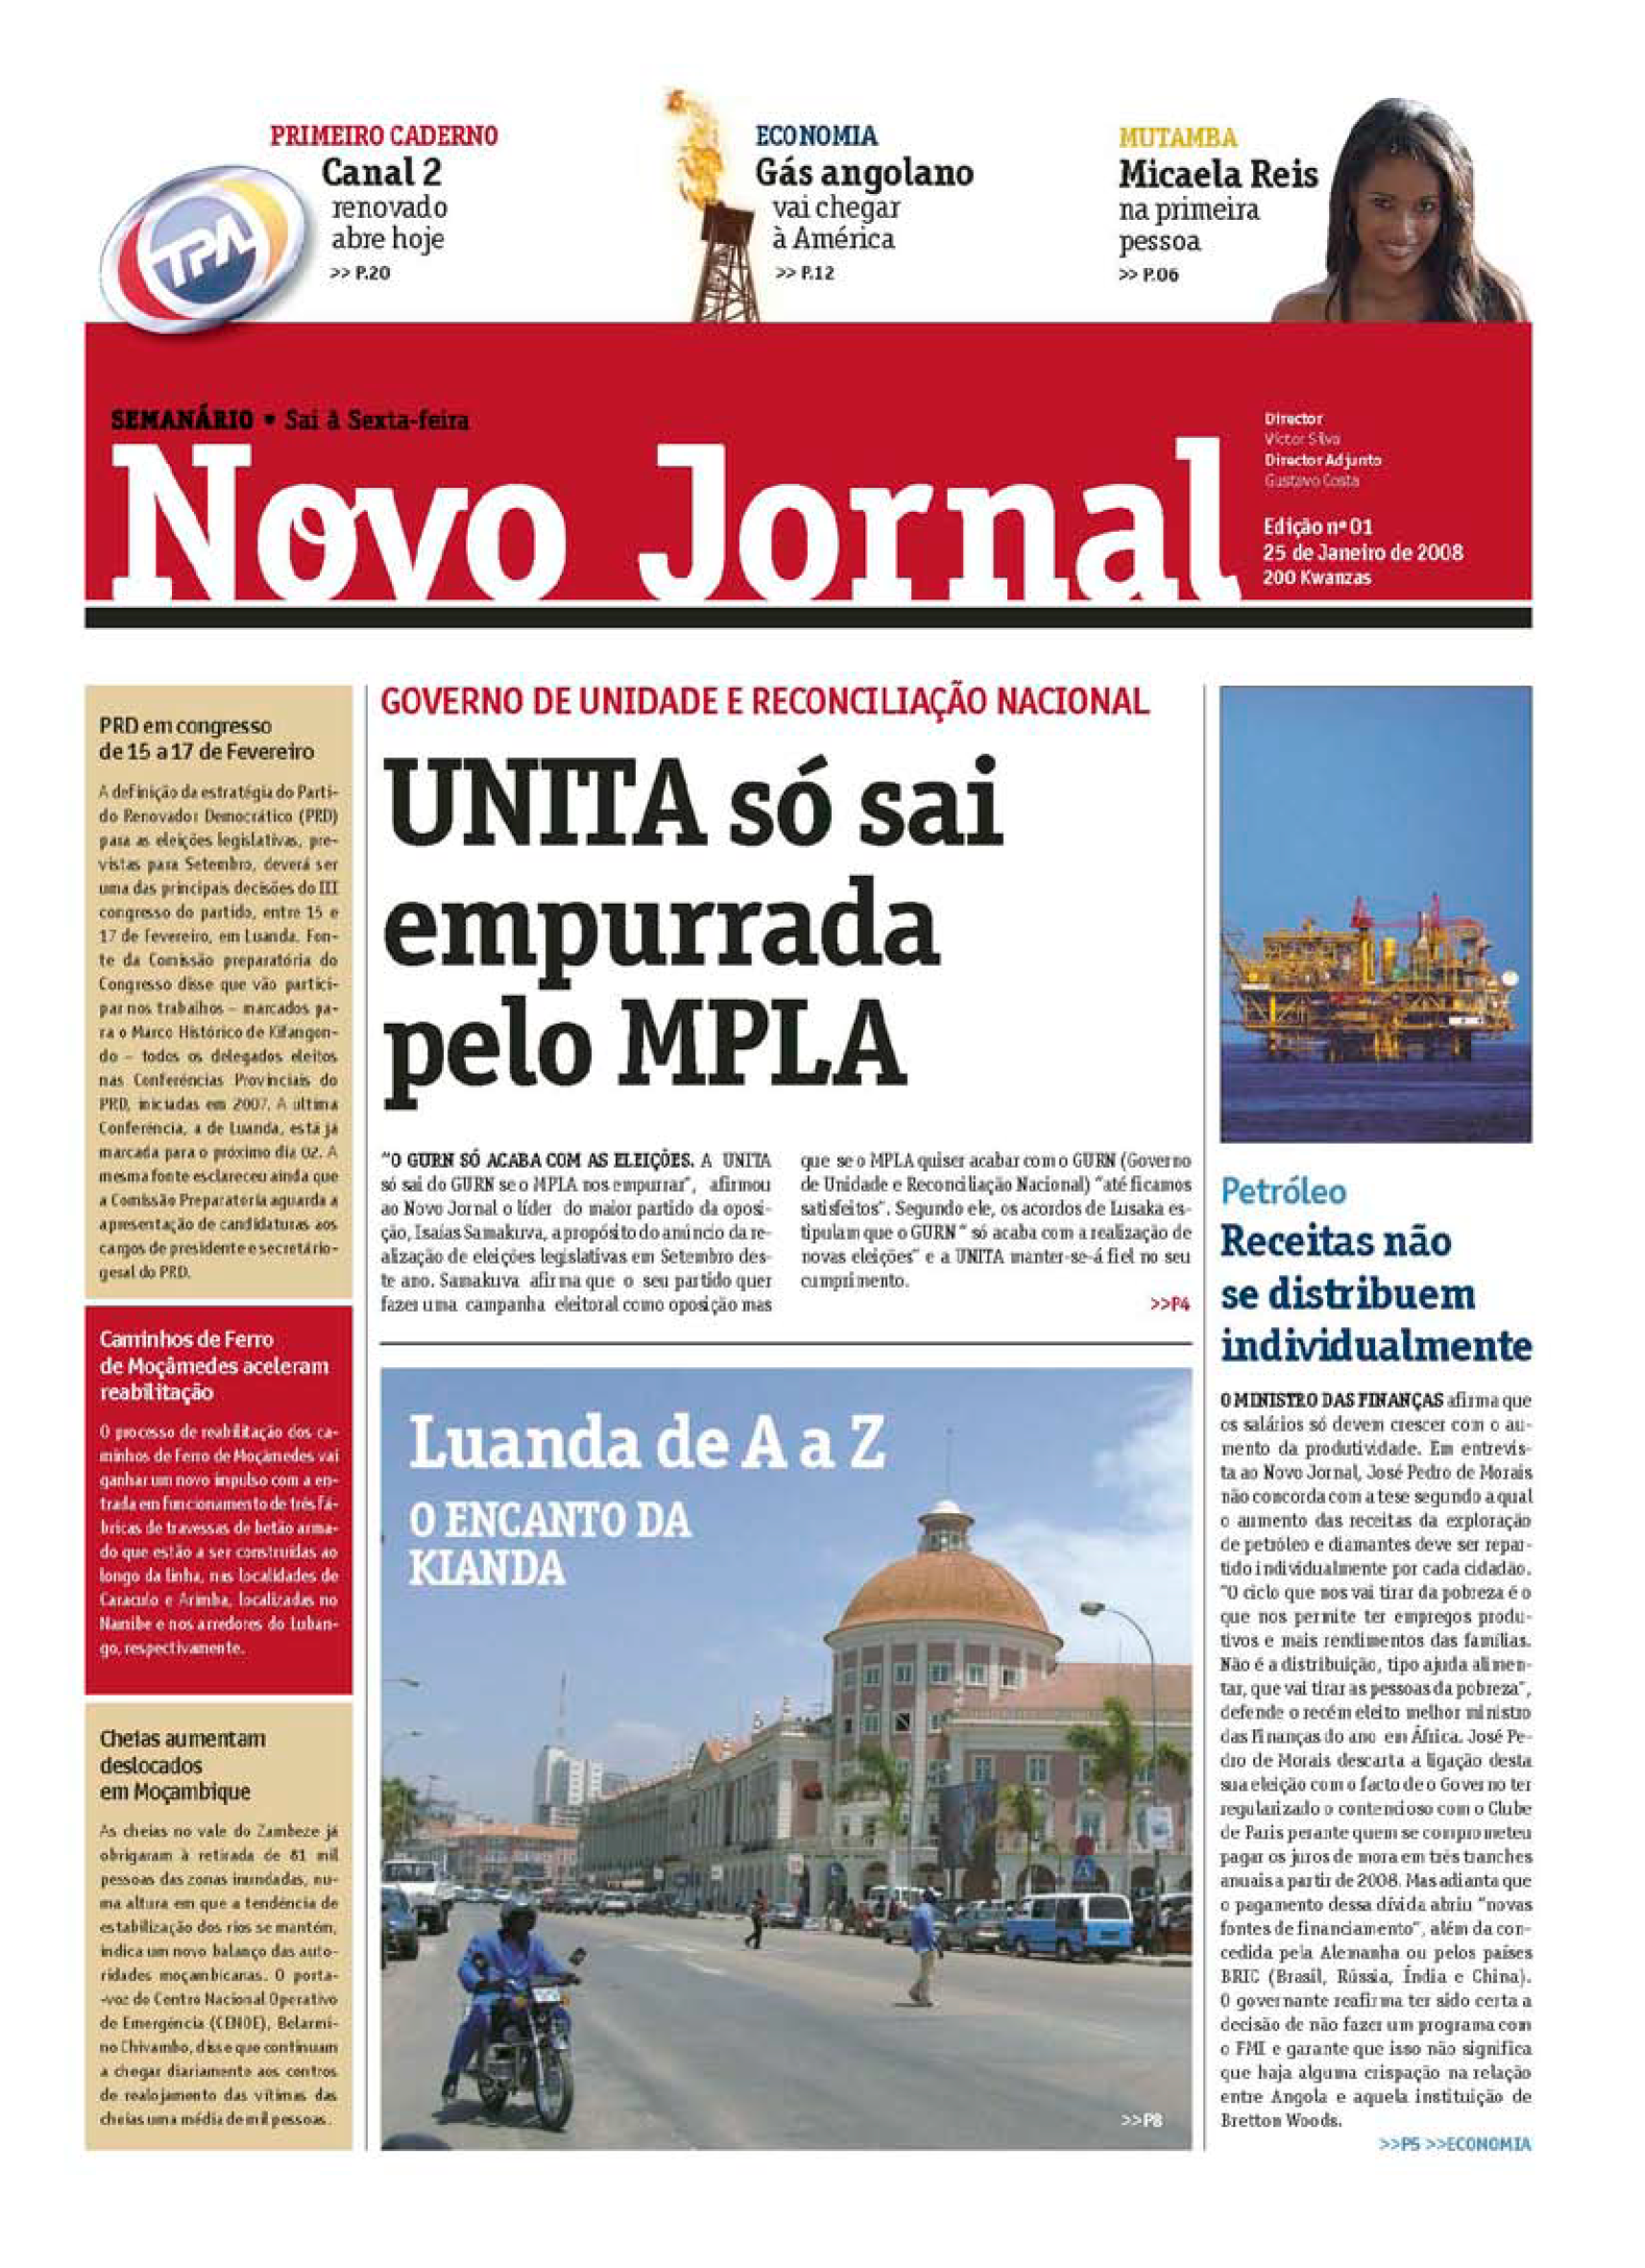 Capa do Novo Jornal n.º 1